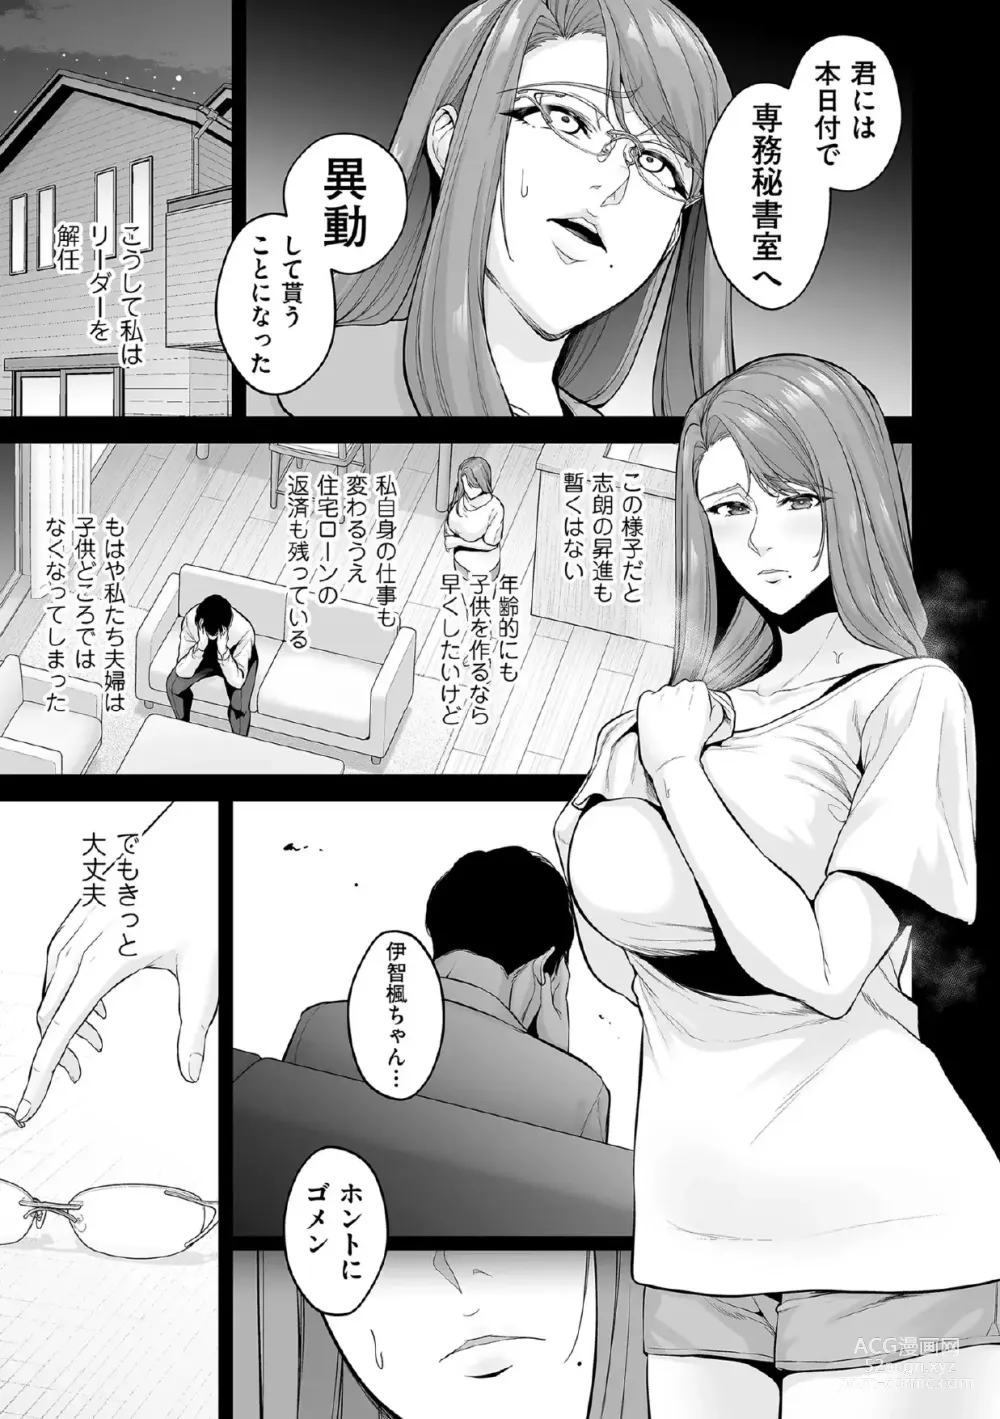 Page 7 of manga 本性 chapter 01-03